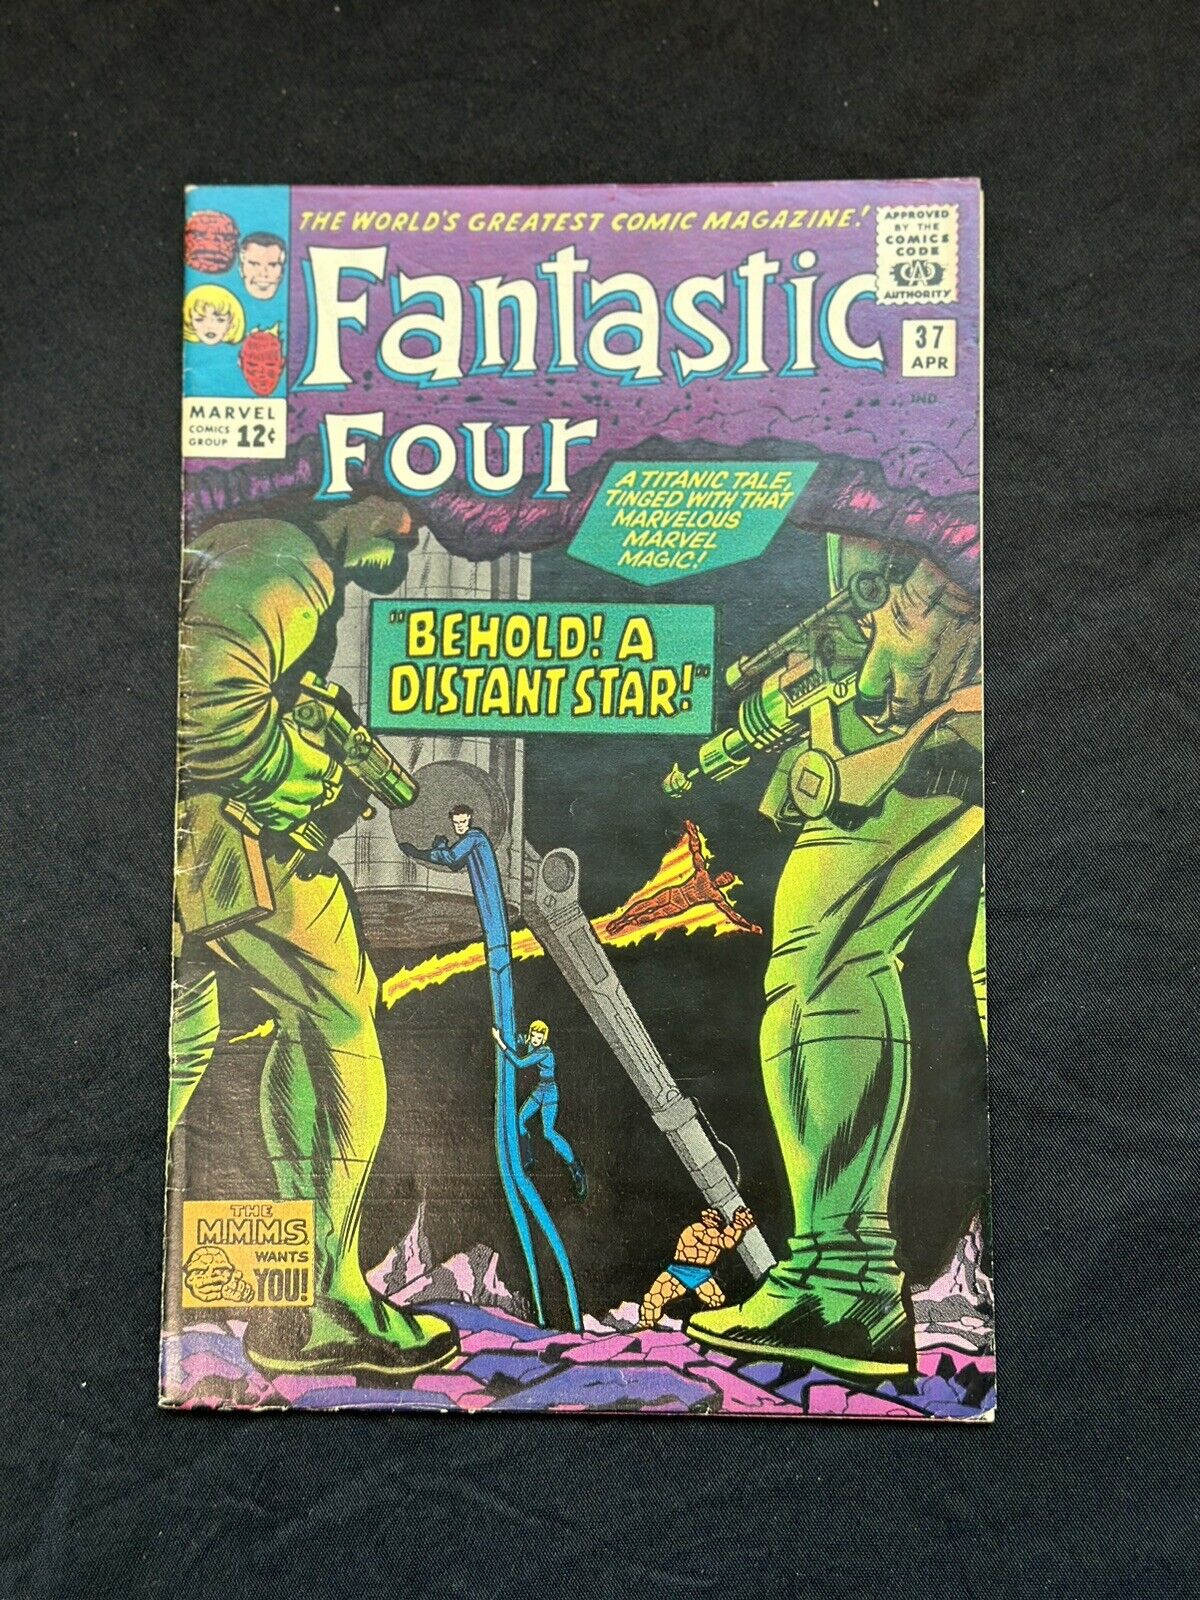 Fantastic Four #37 FN 6.0 Skrulls Appearance Jack Kirby Art Marvel 1965